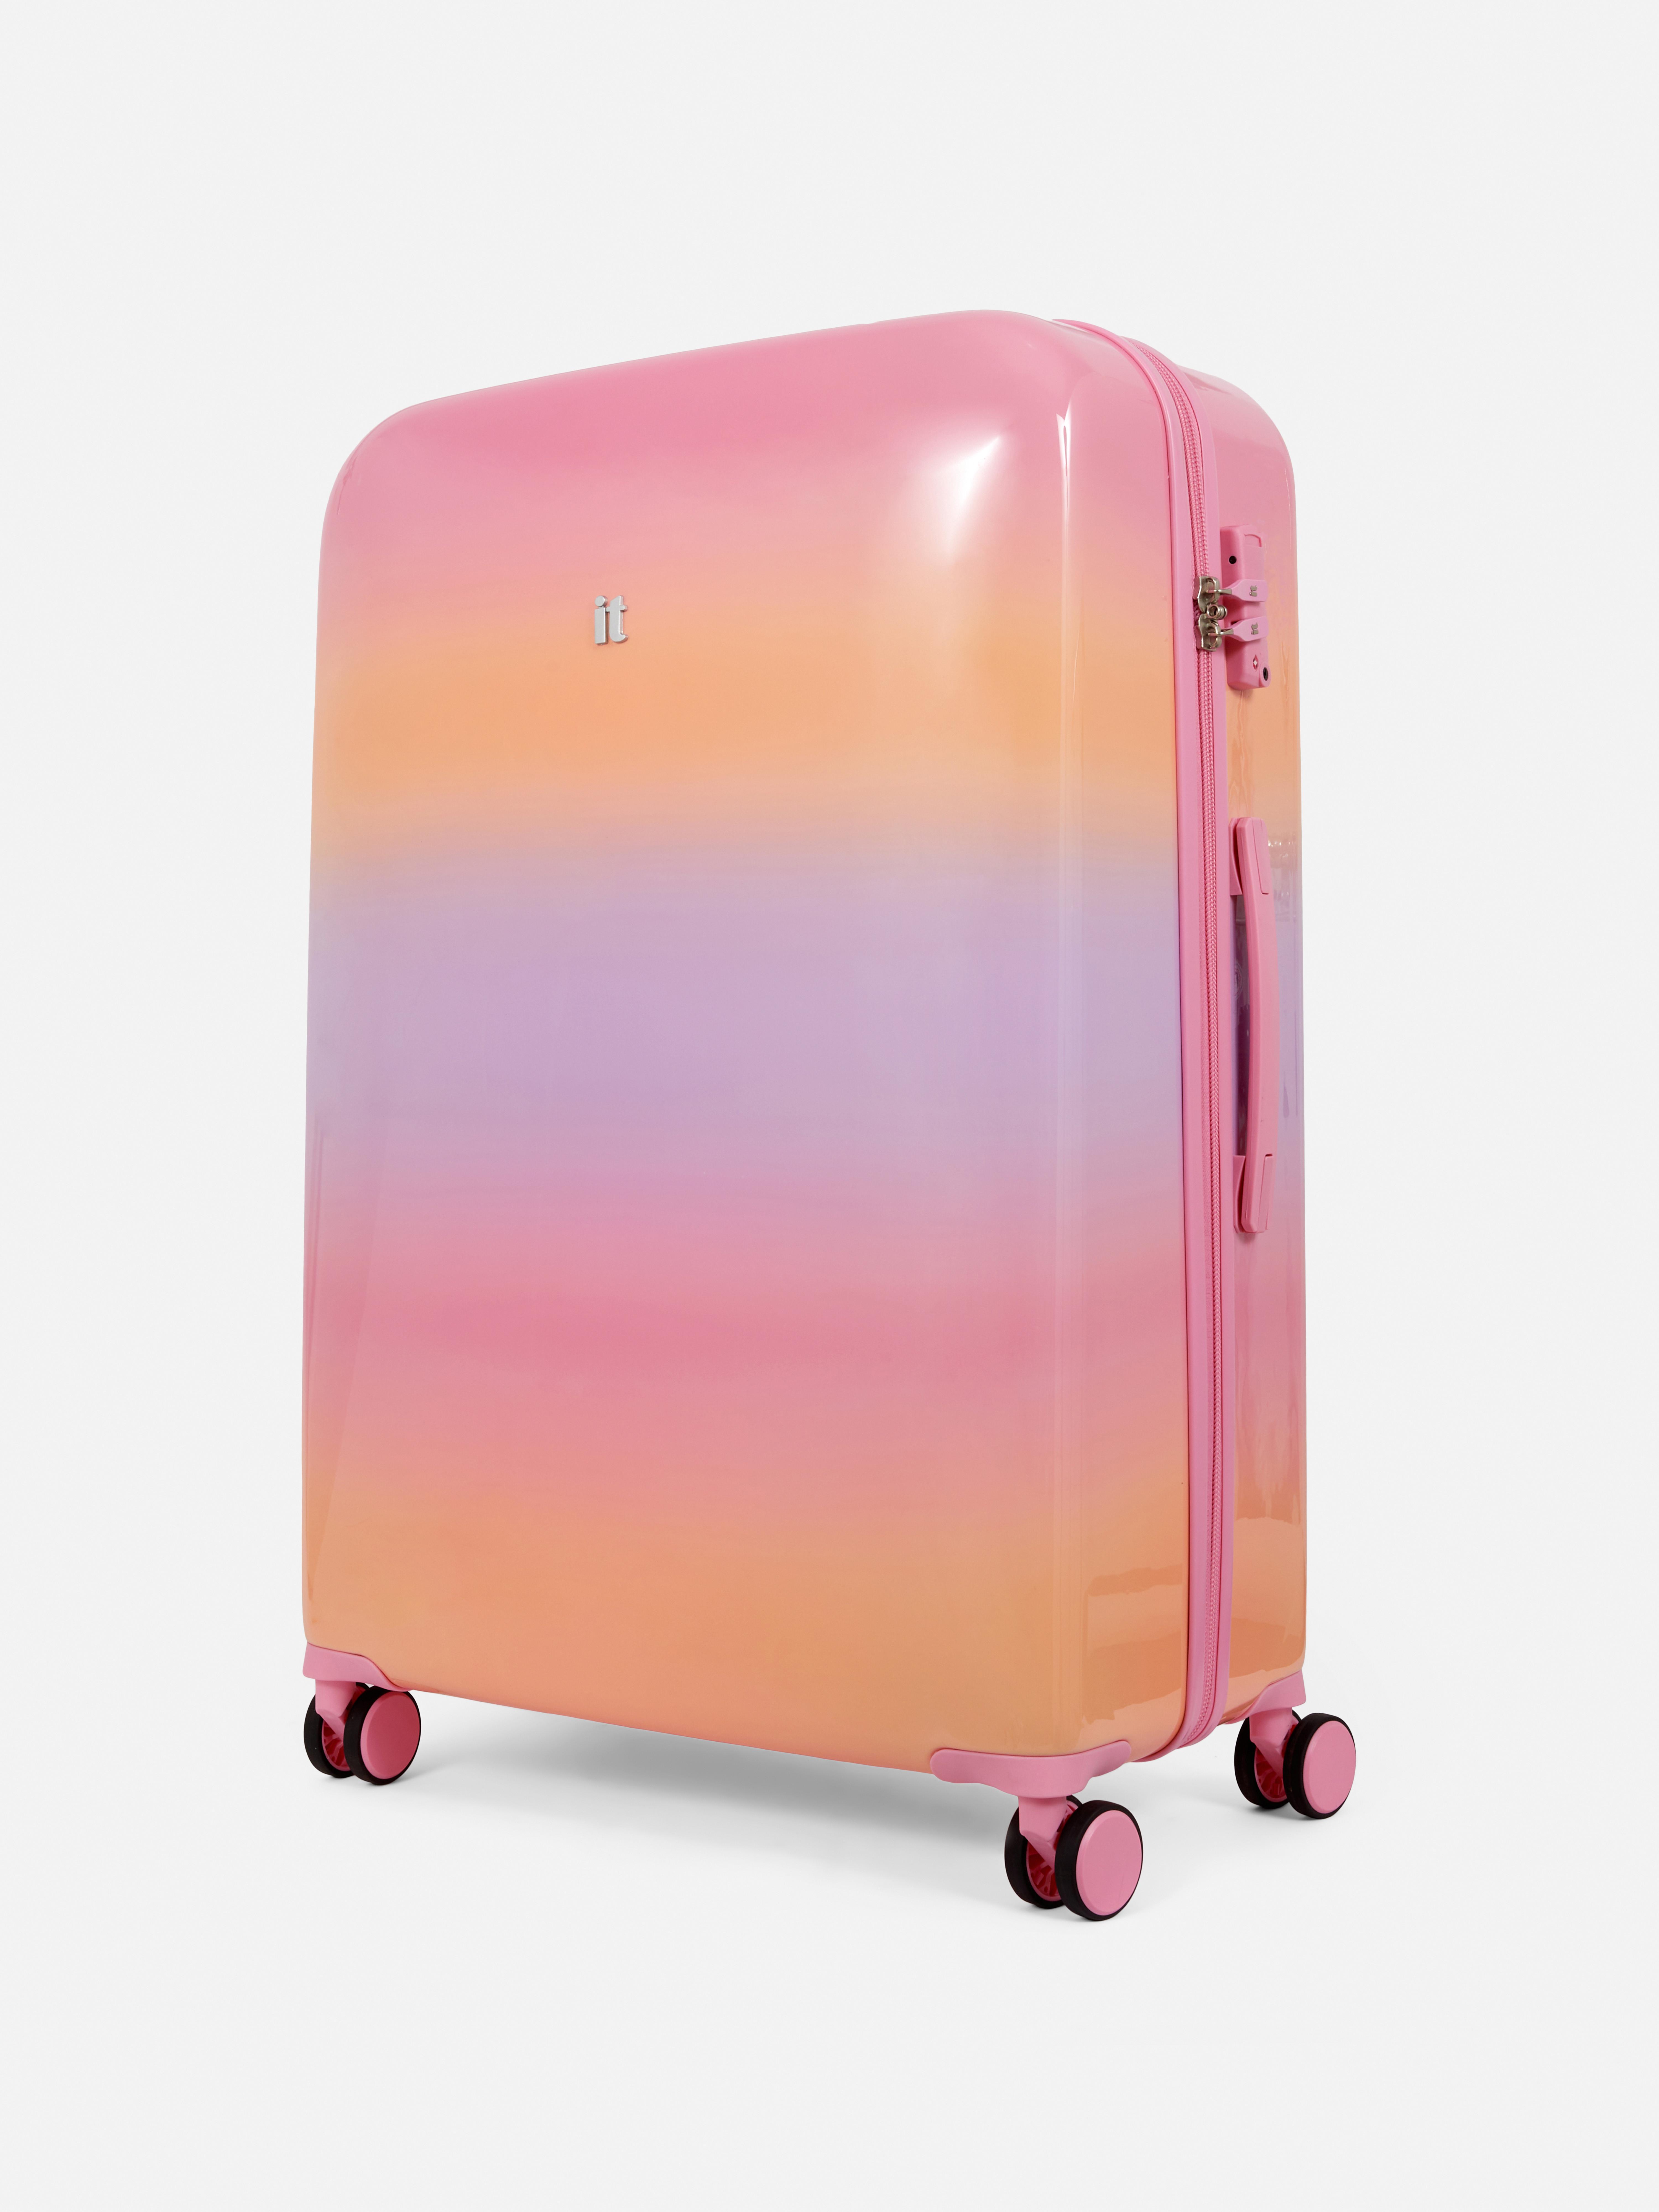 patroon Apt verhaal it Luggage Ombré Hard Shell Suitcase | Primark